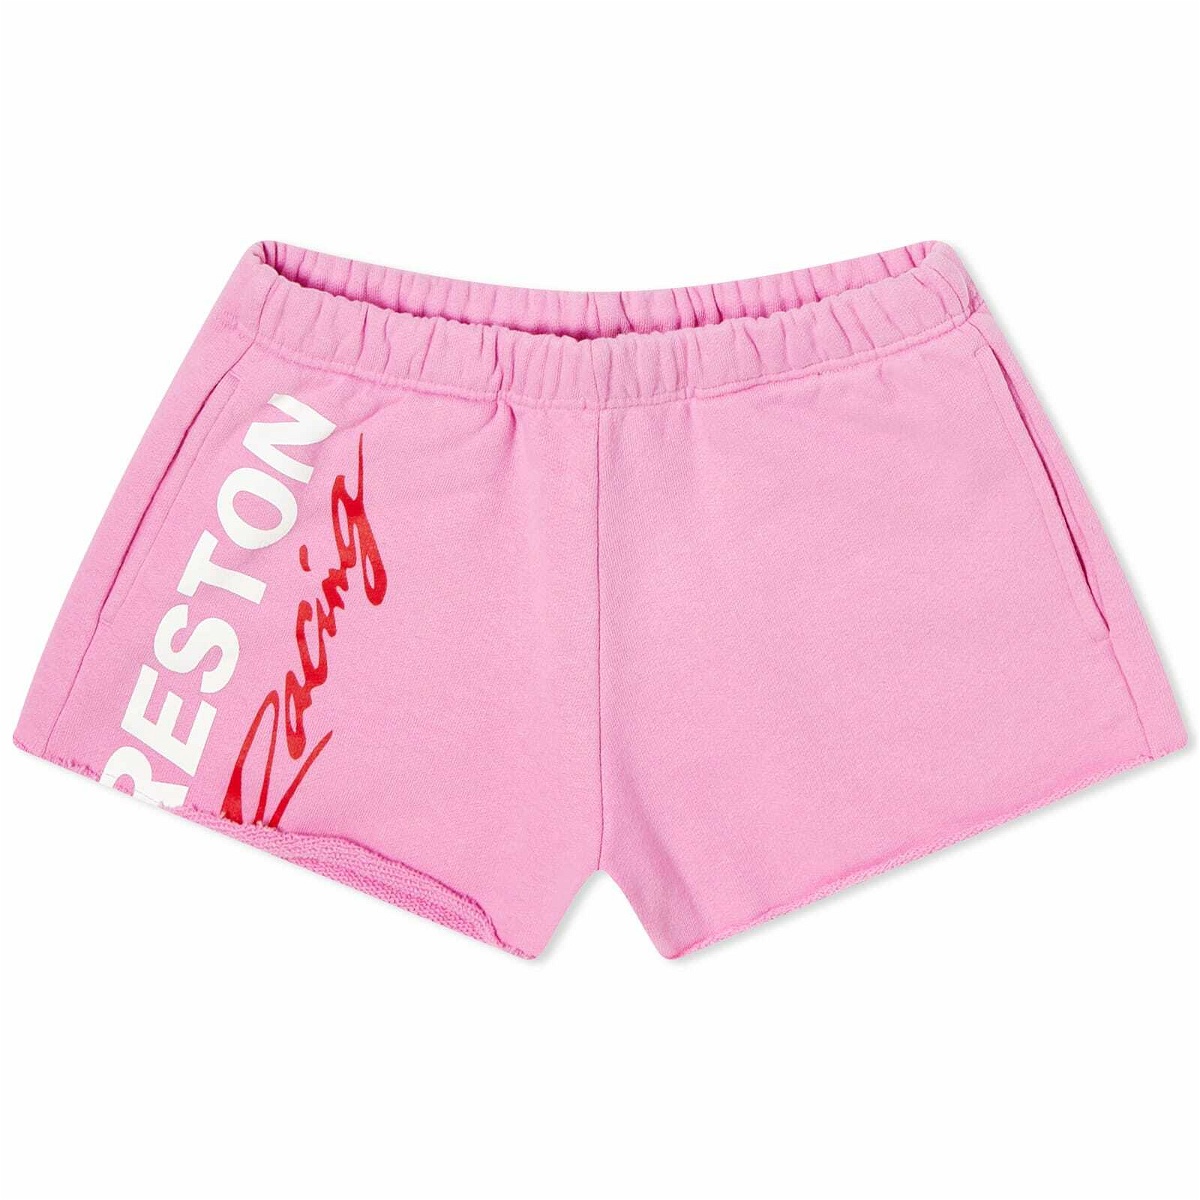 Heron Preston Women's Preston Racing Logo Shorts in Pink Heron Preston